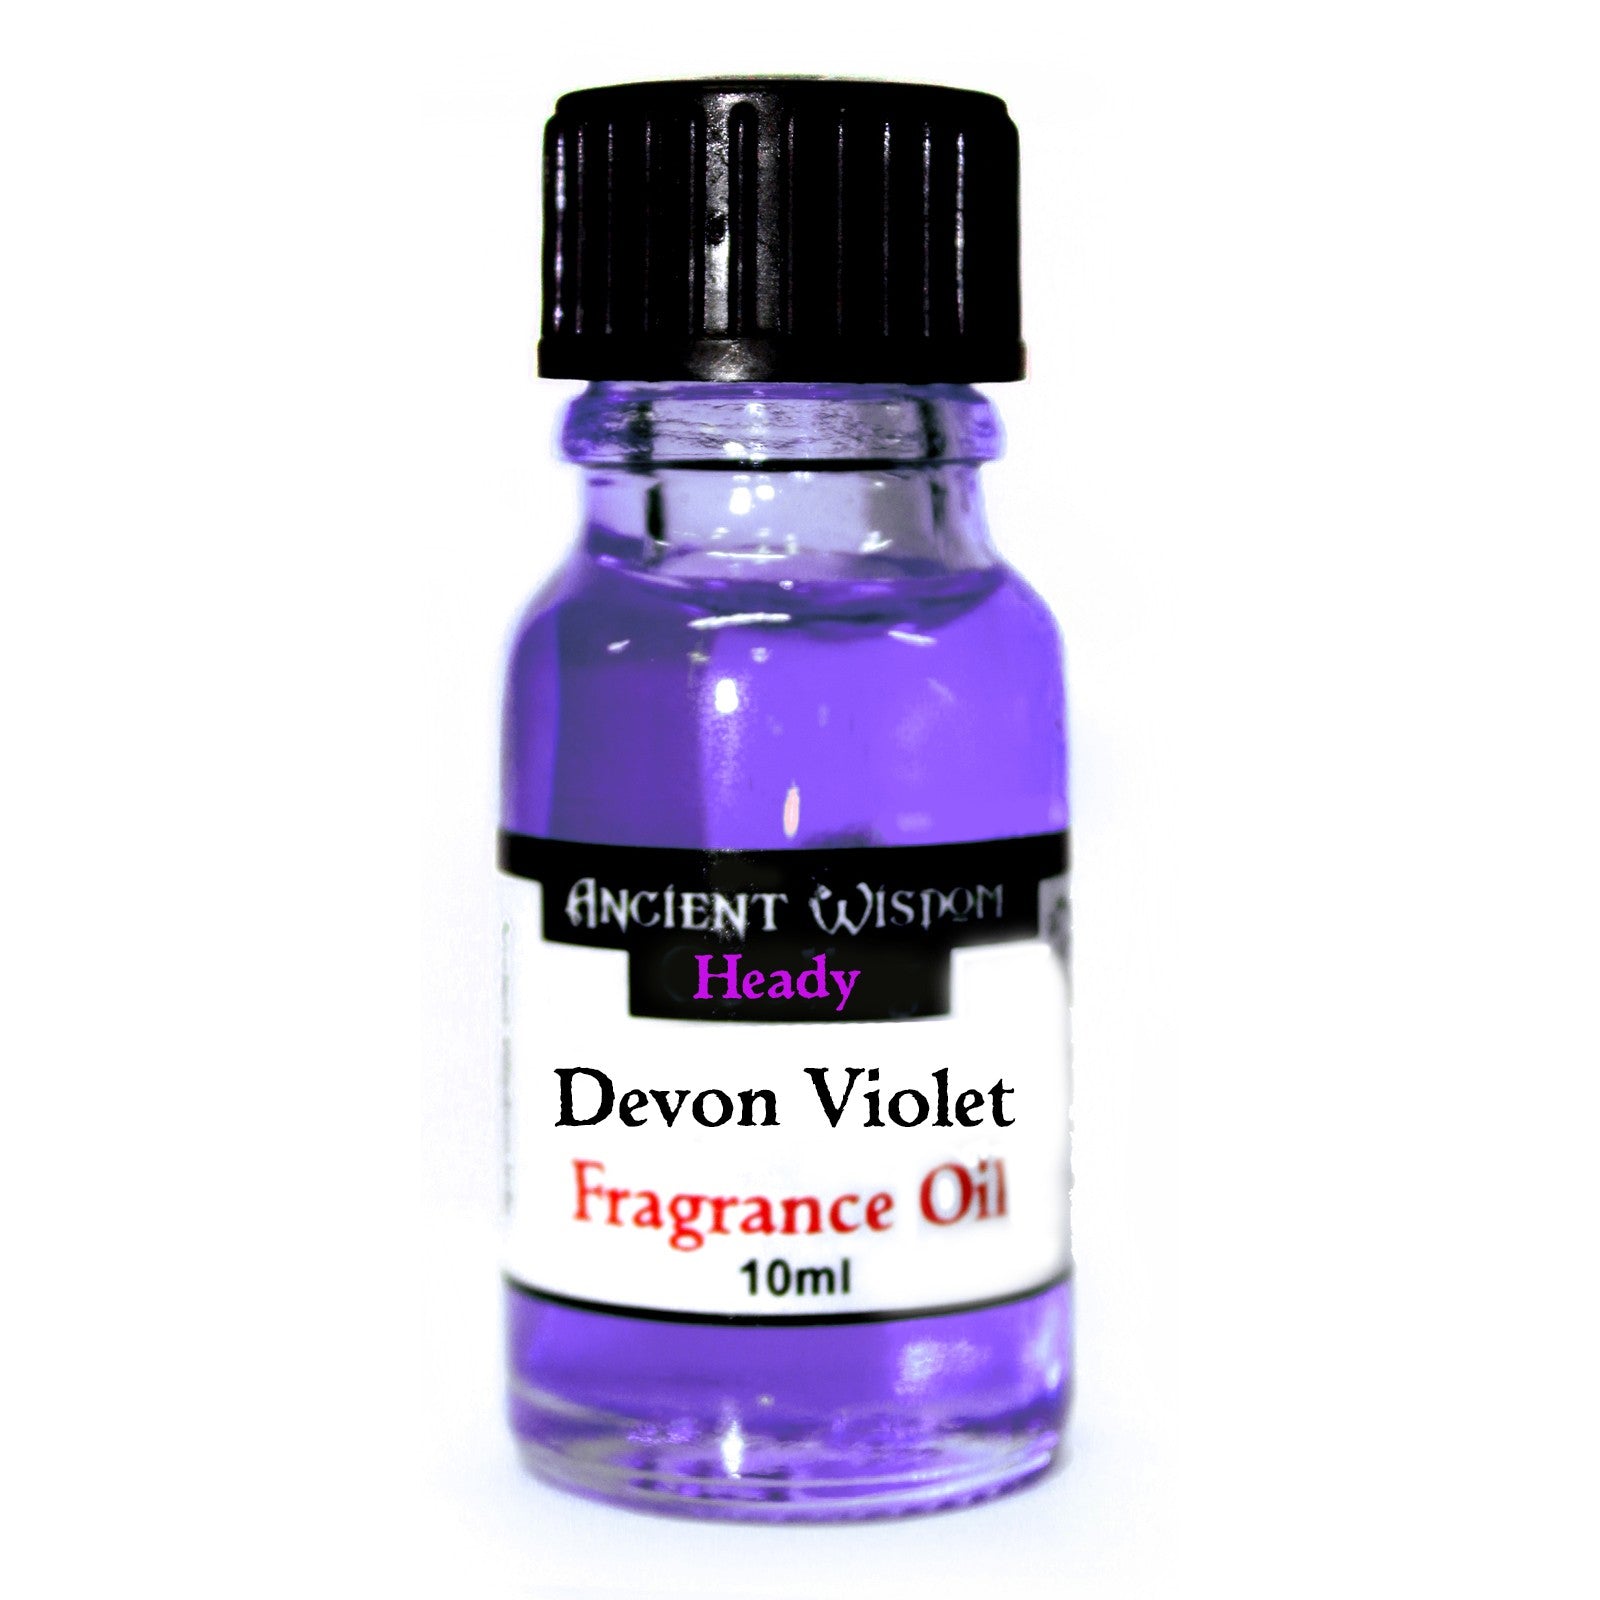 10ml Devon Violet Fragrance Oil